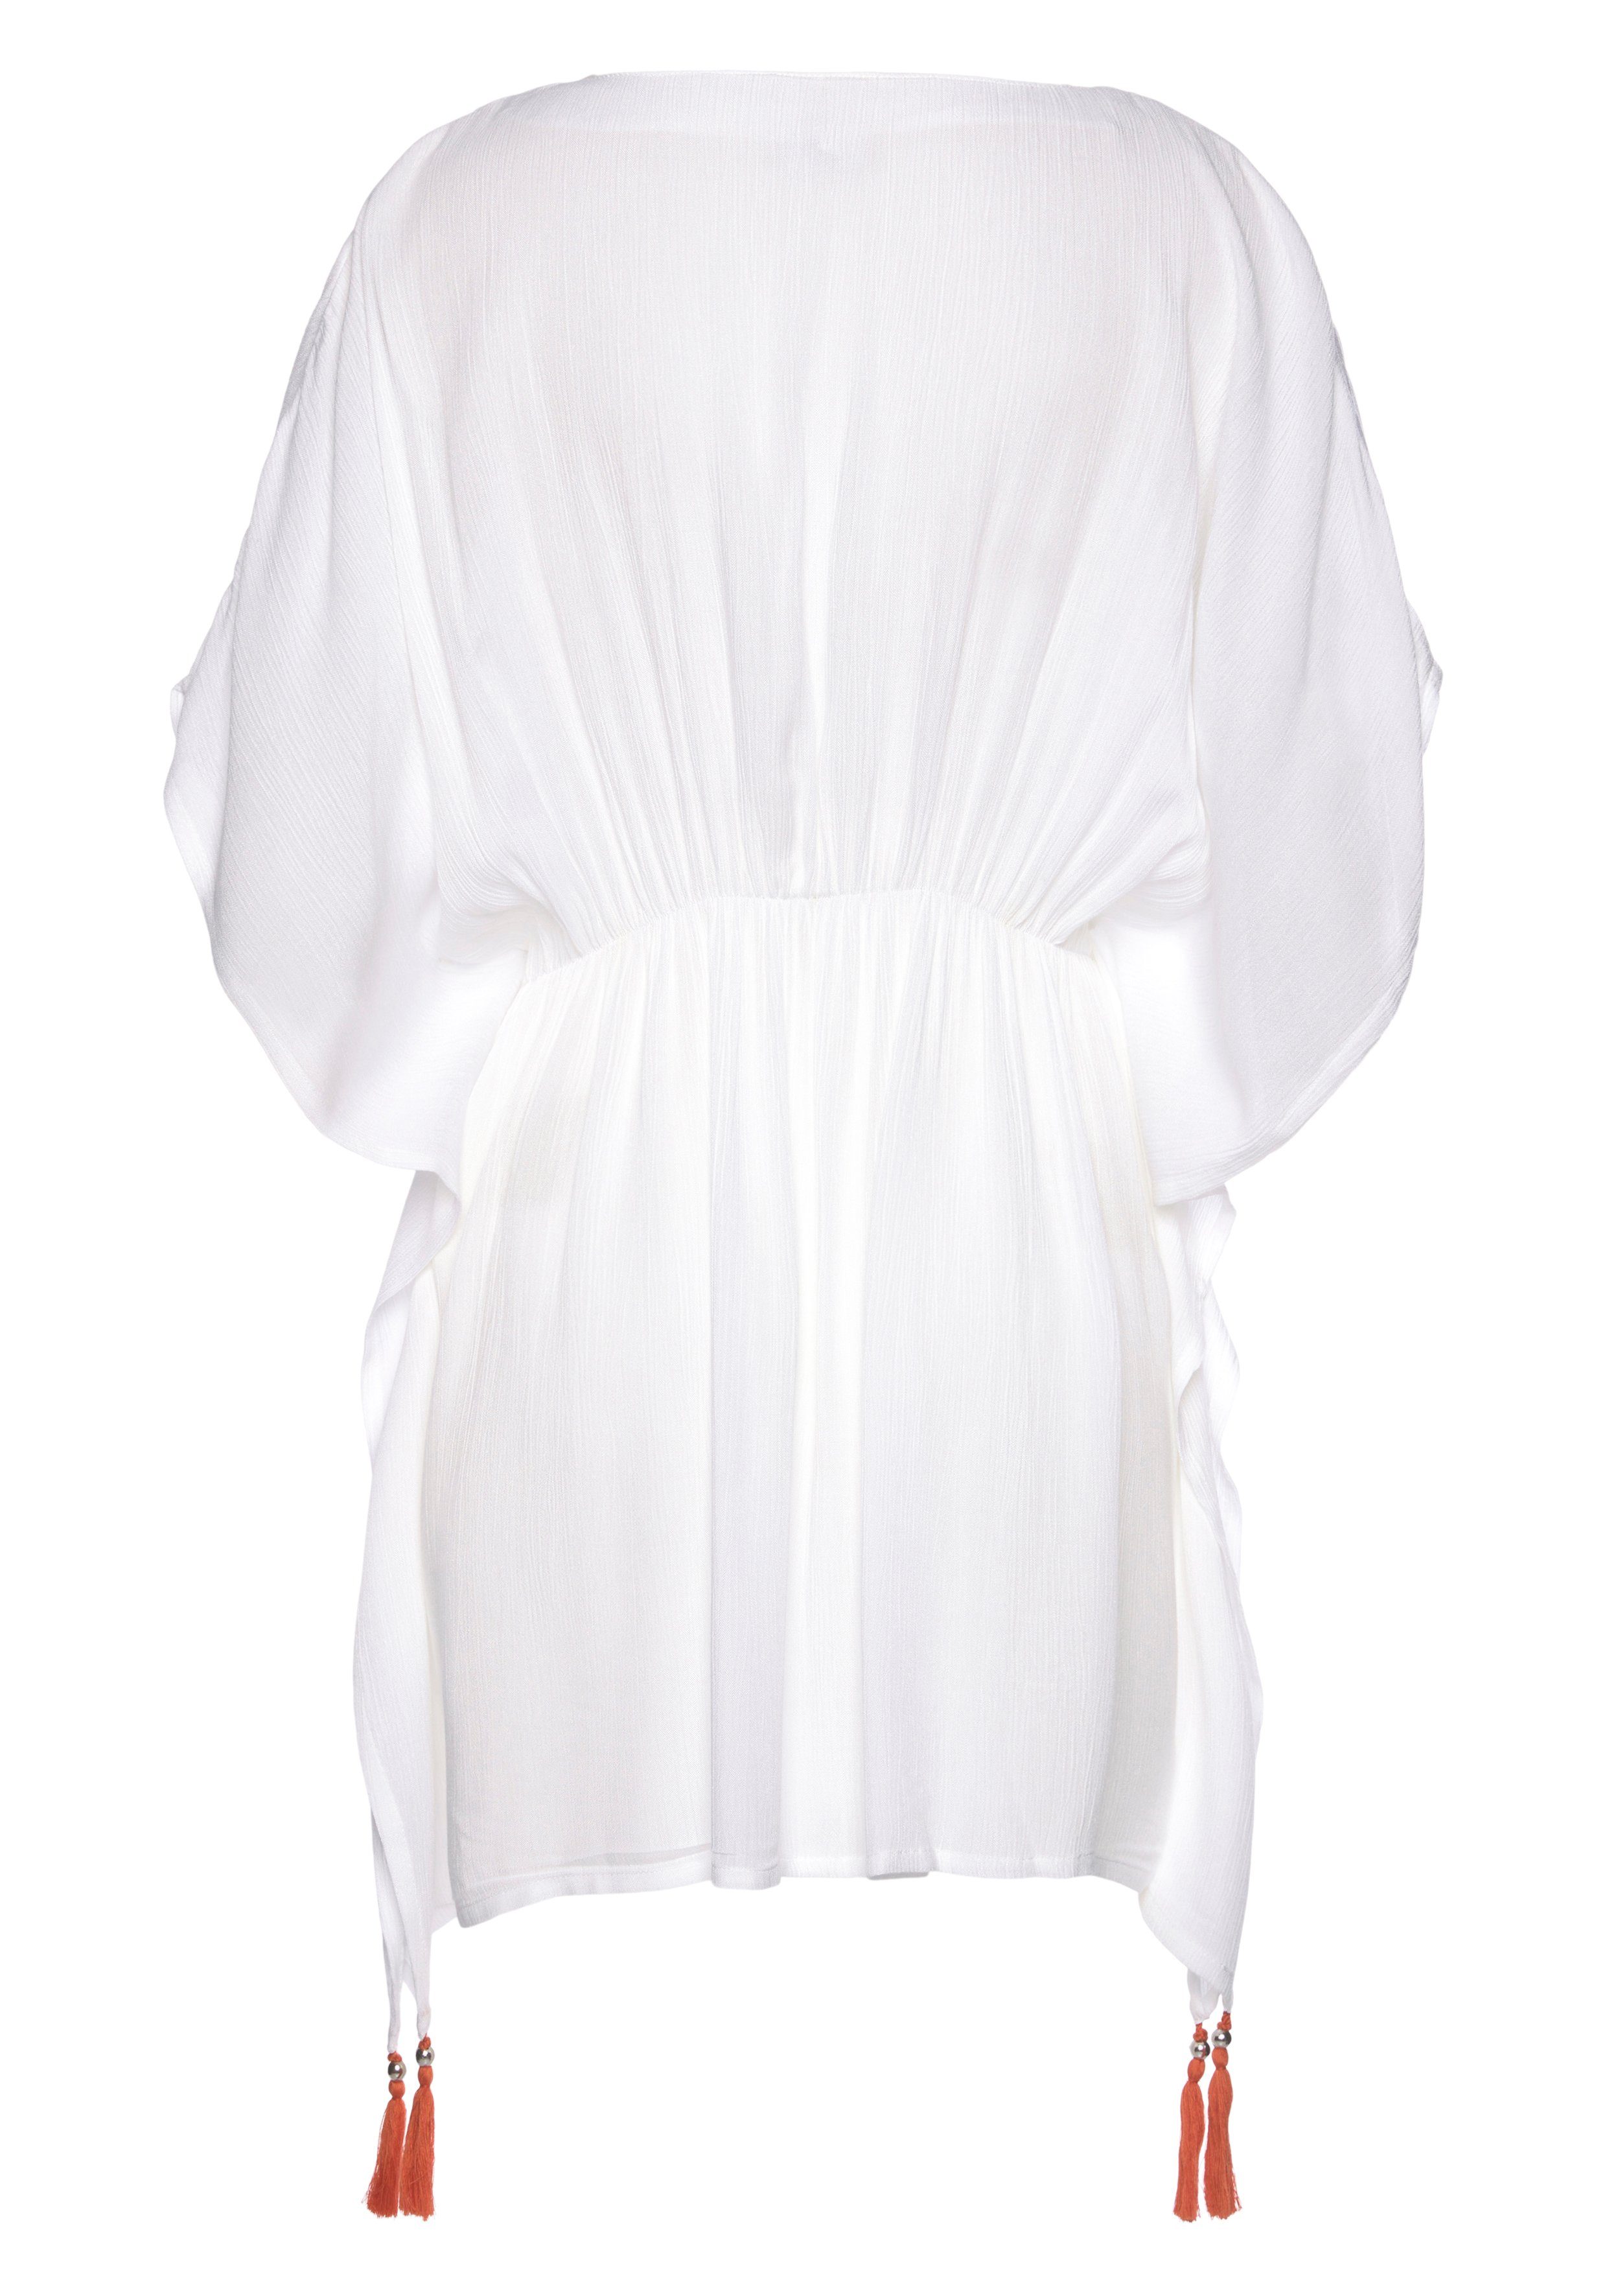 LASCANA Tunika Viskose, Blusenkleid, Strandmode, aus gekreppter transparent